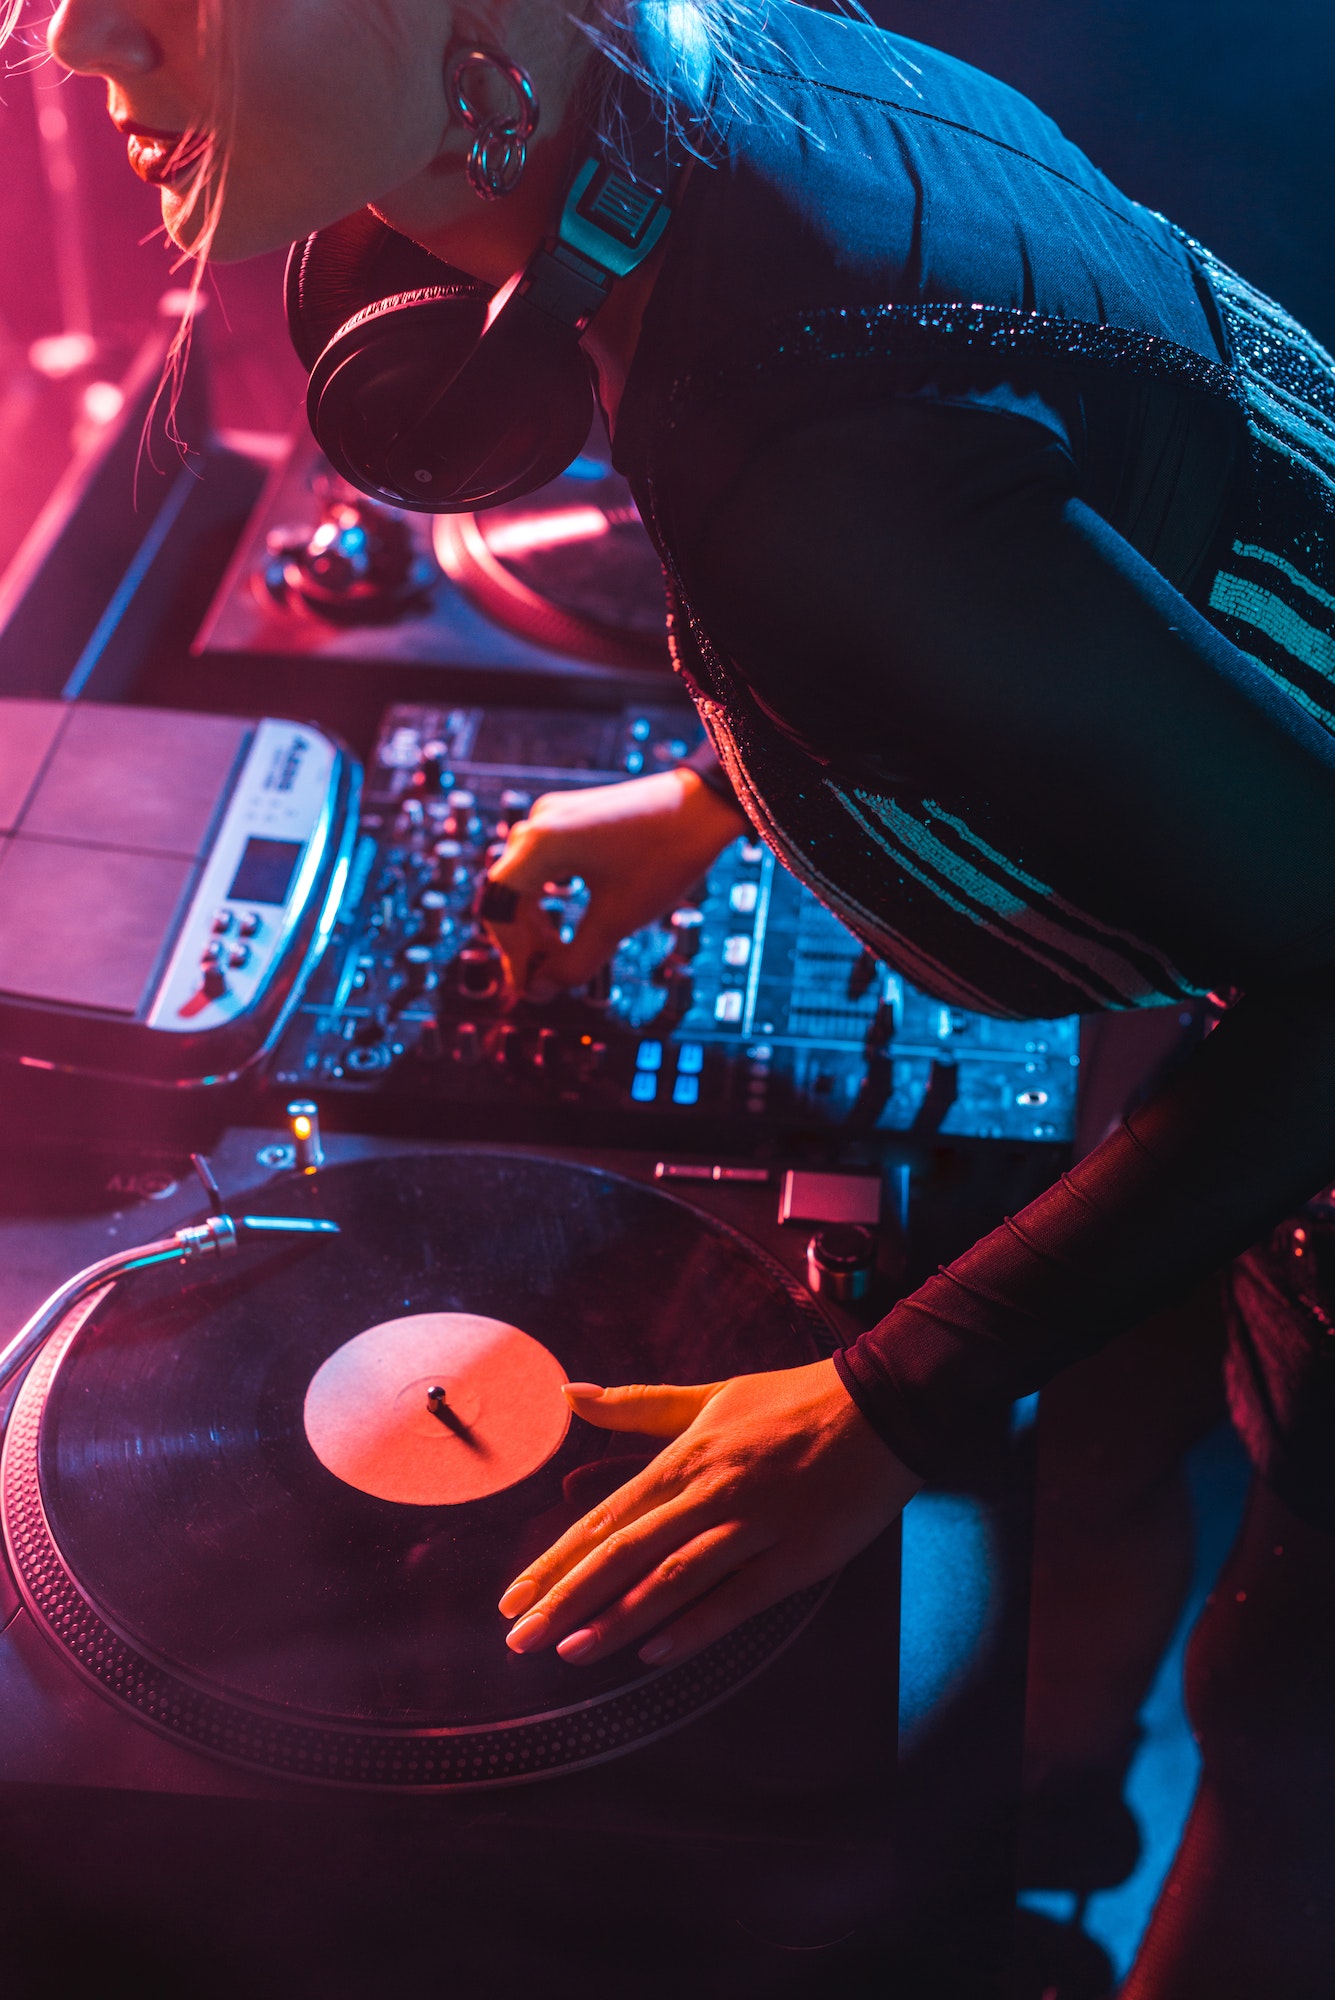 cropped view of focused dj woman using dj equipment in nightclub